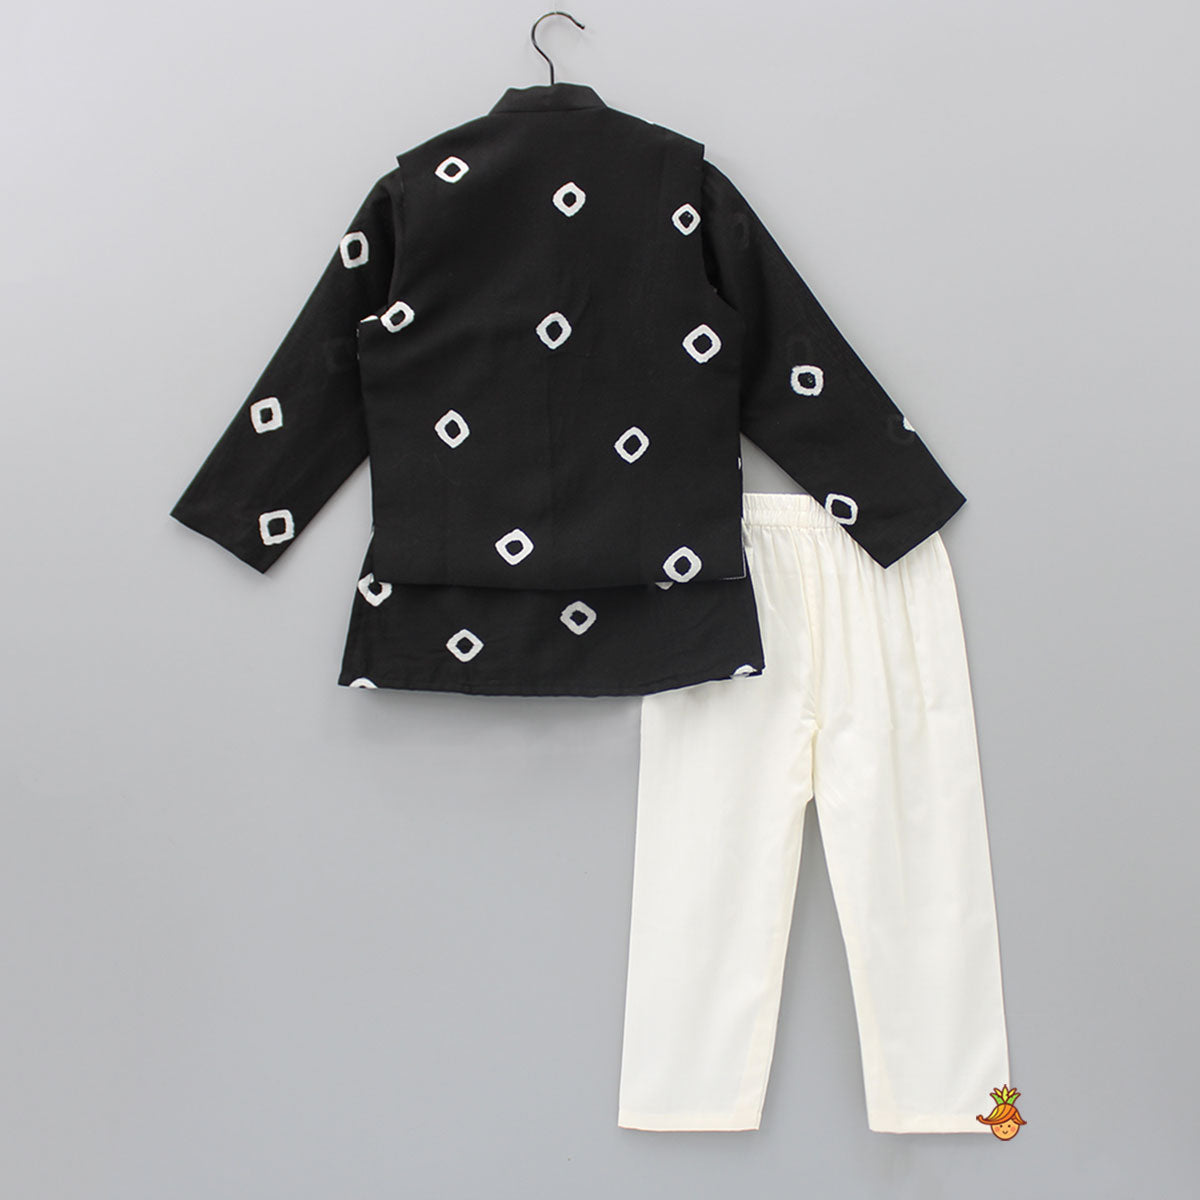 Bandhani Printed Black Kurta And Jacket With Off White Pyjama